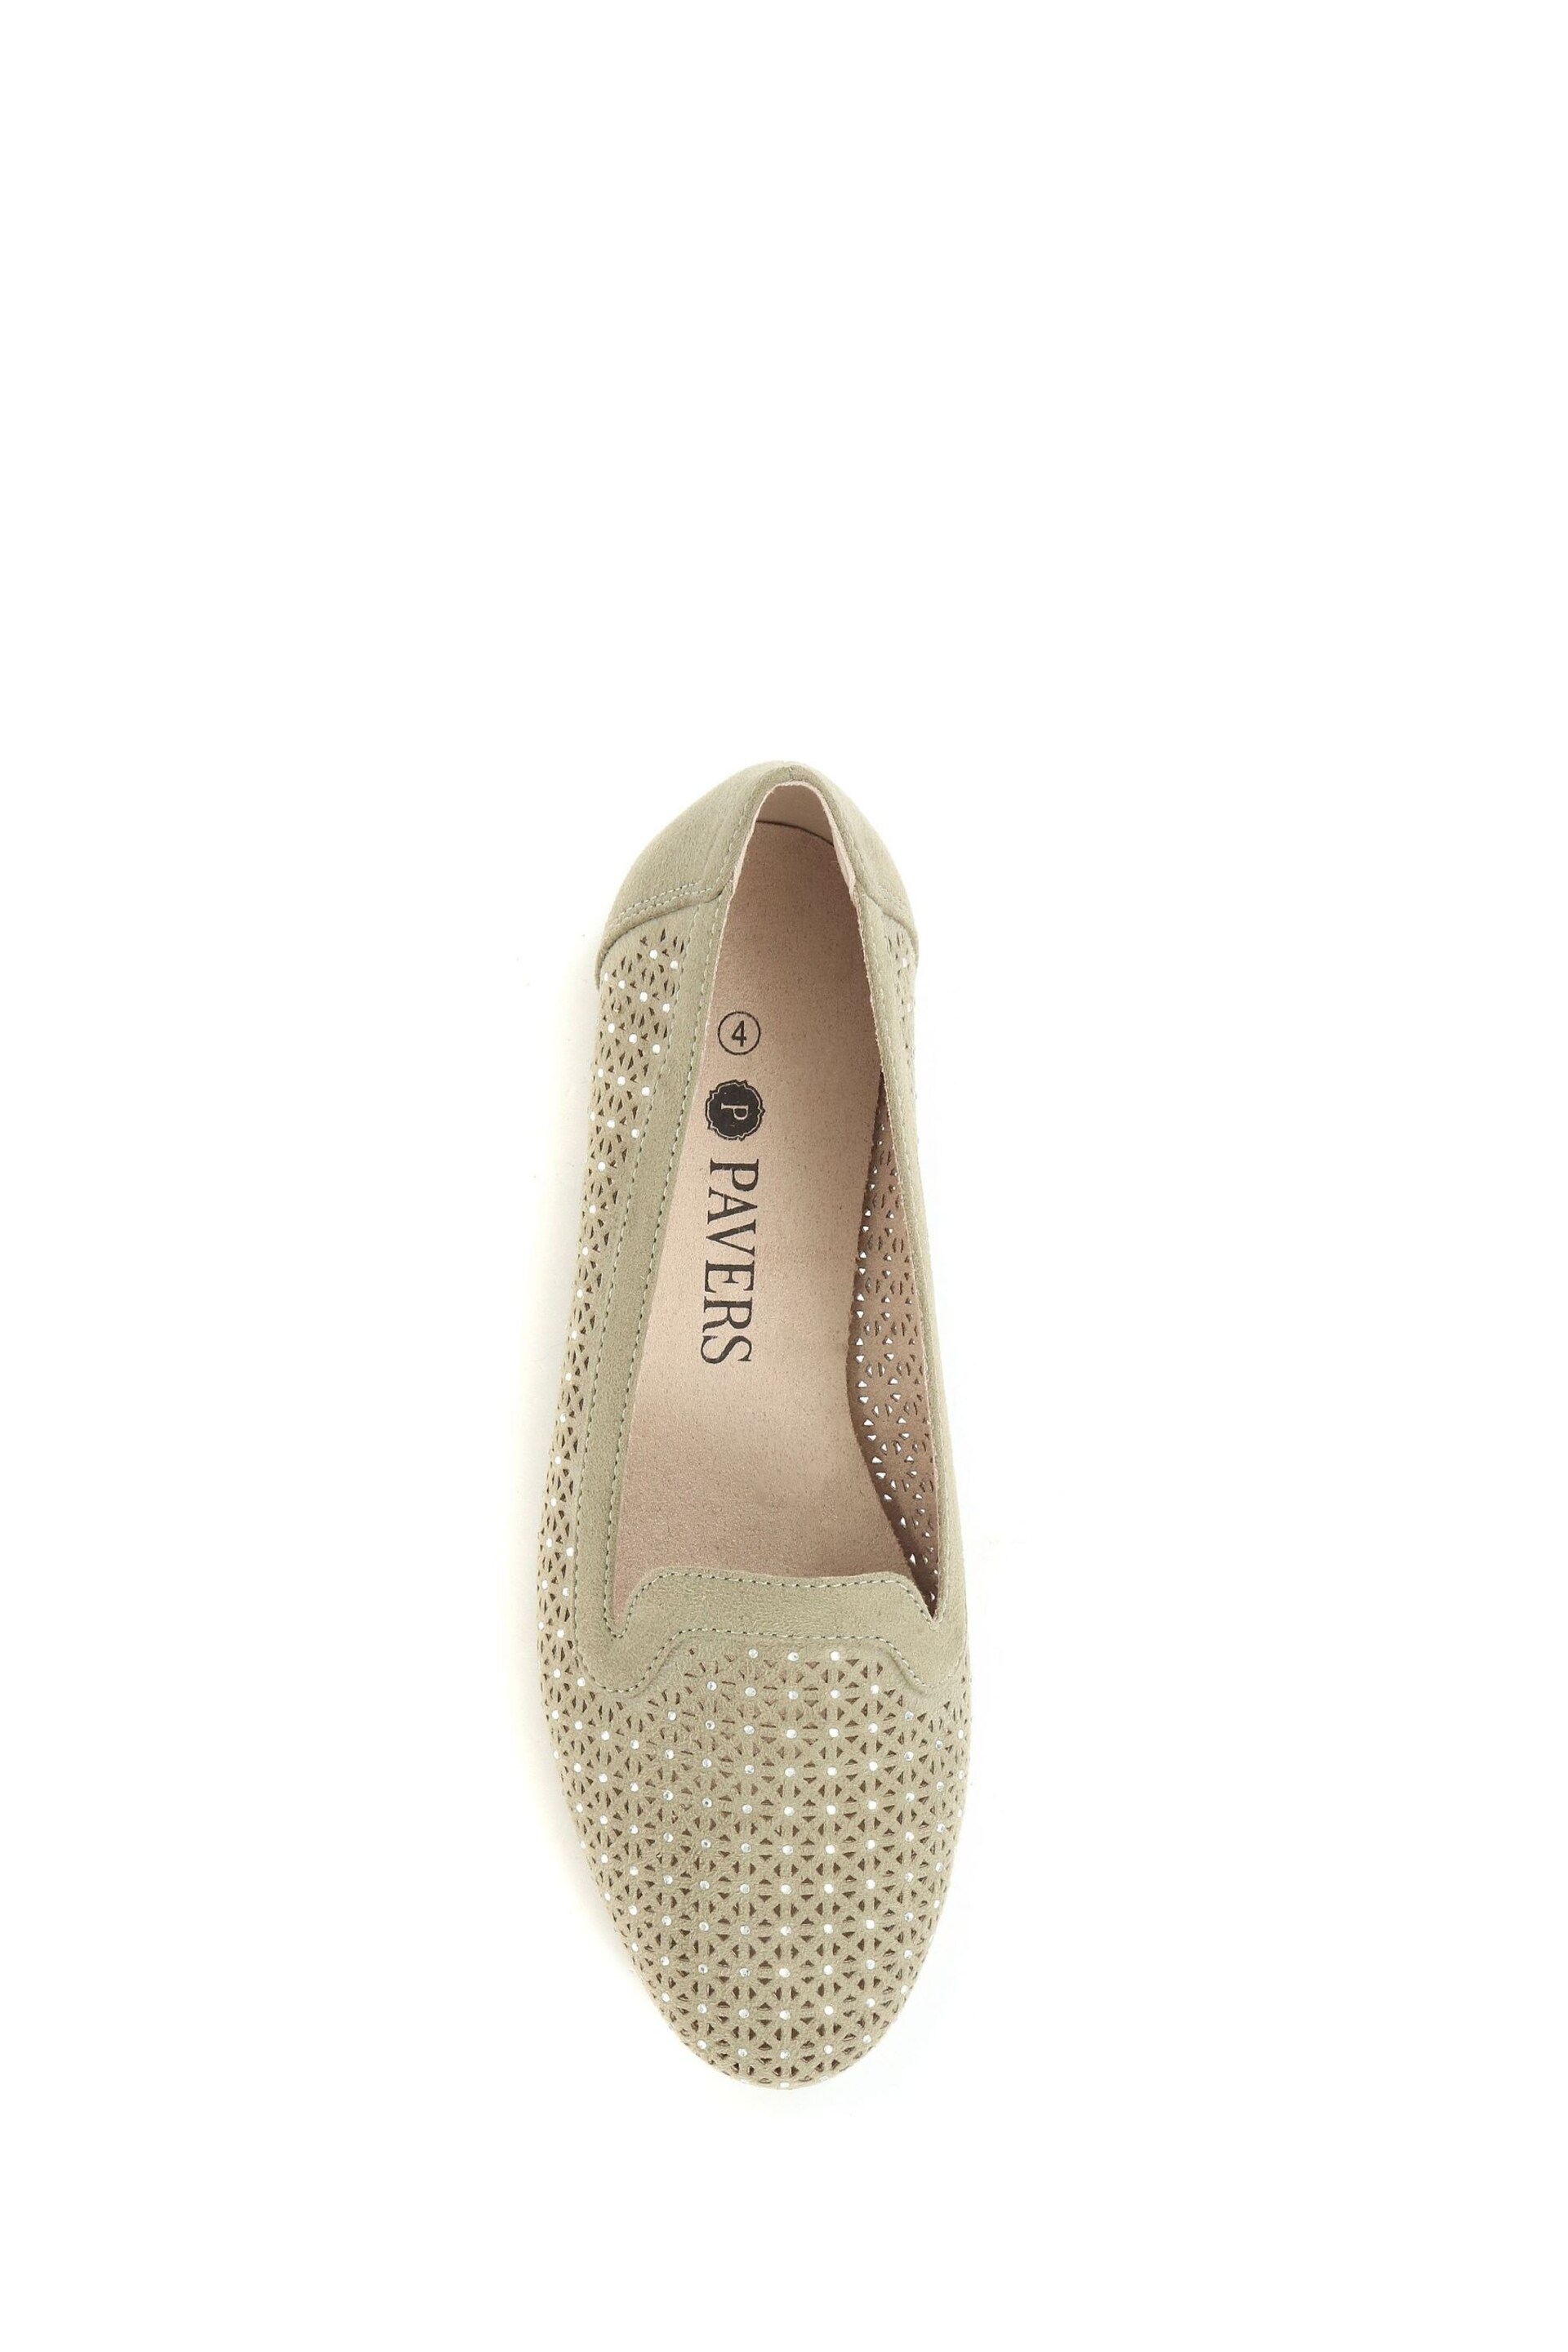 Pavers Natural Slip-On Embellished Loafers - Image 4 of 5